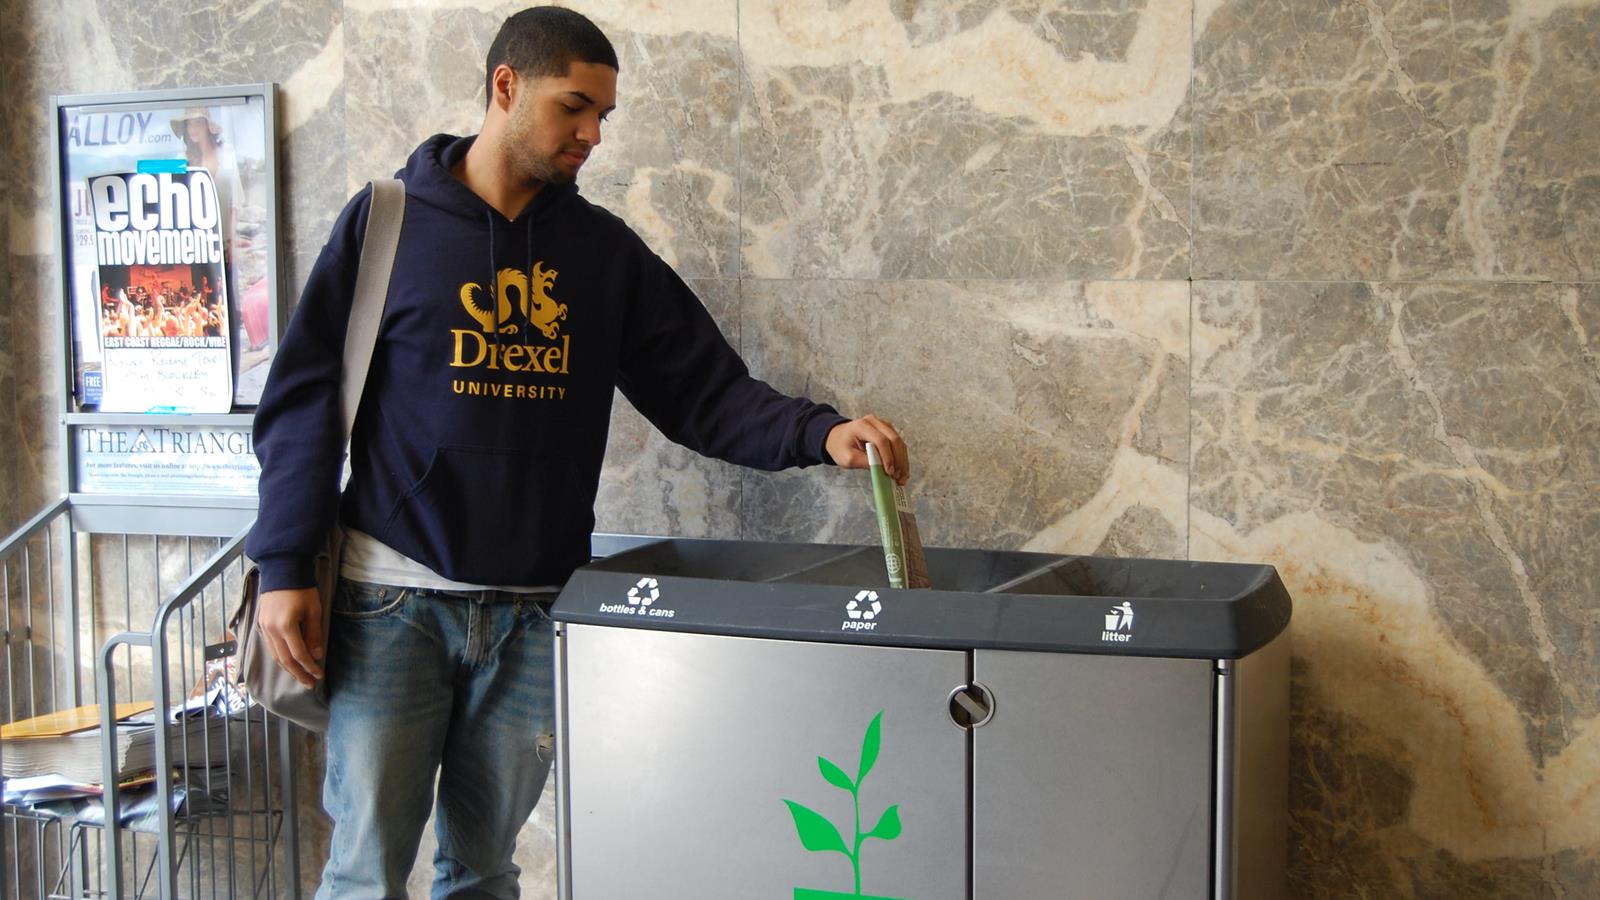 Drexel student using recycling bin